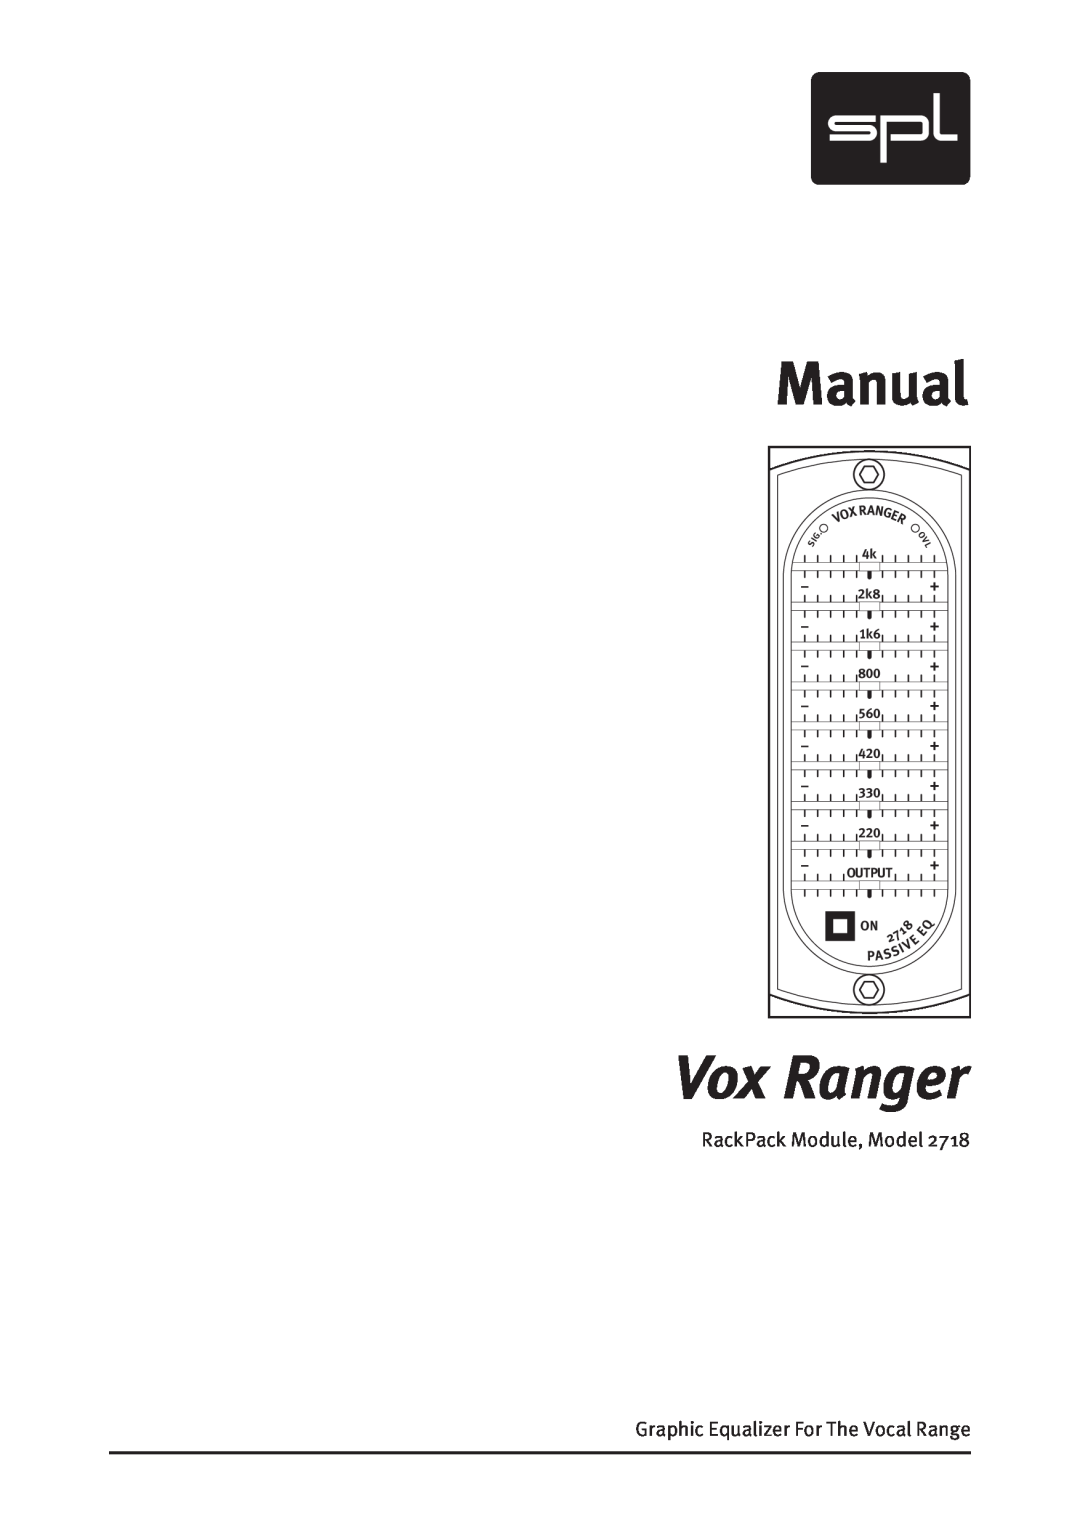 Sound Performance Lab 2718 manual Manual, Vox Ranger, L      